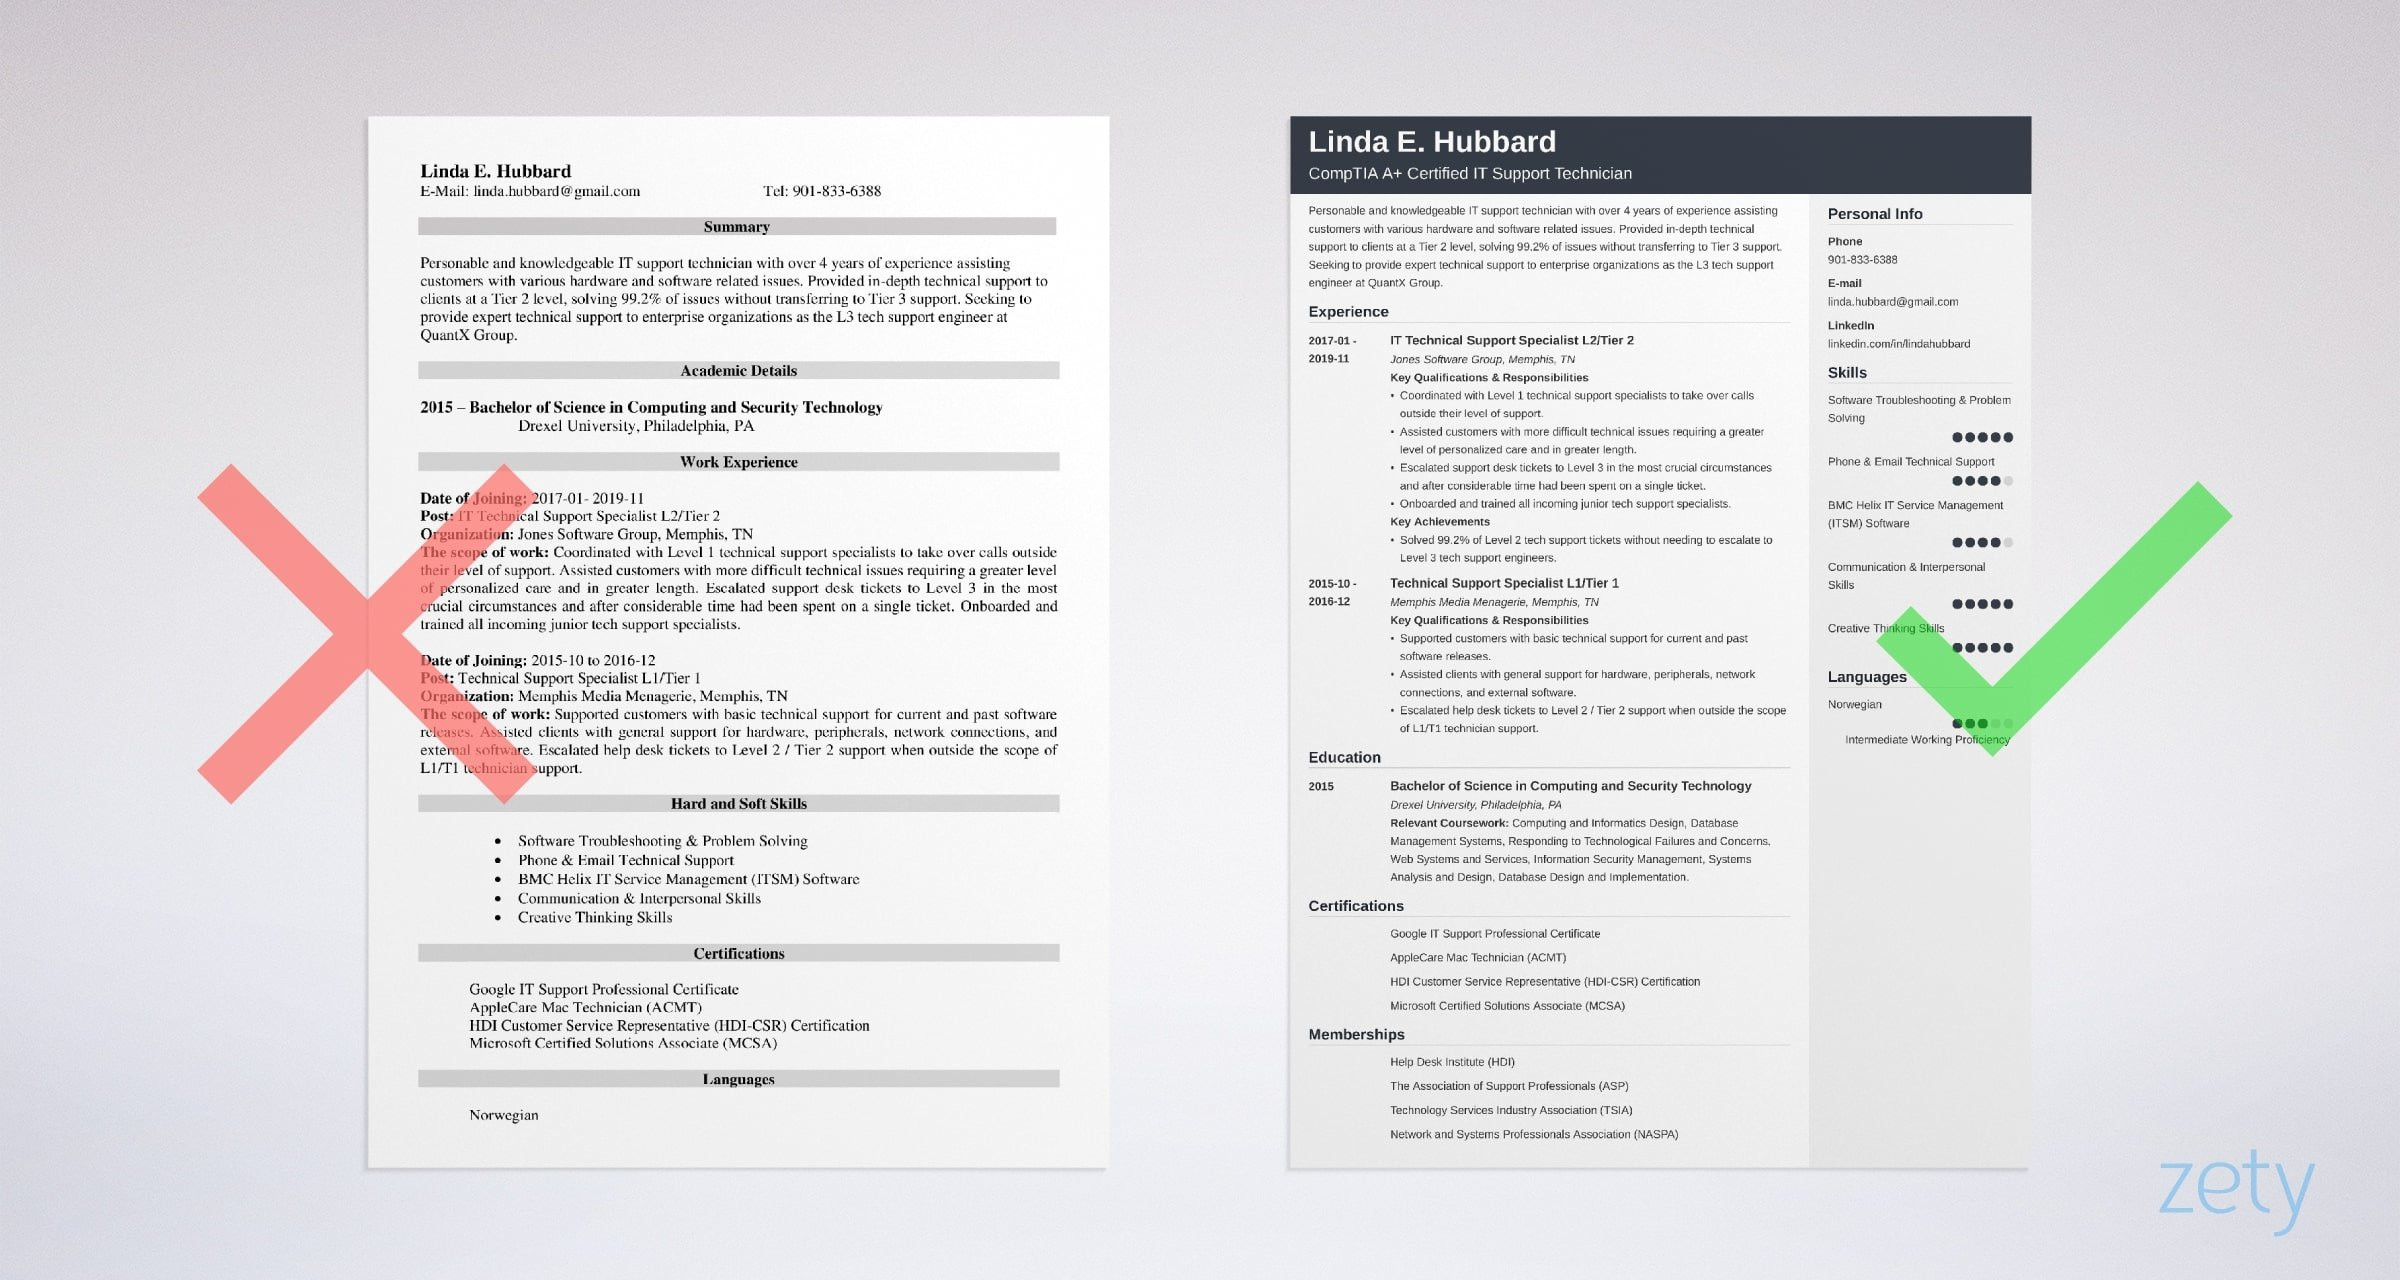 Resume Samples Objective for Technical Field Technical Support Resume Sample & Job Description [20 Tips]